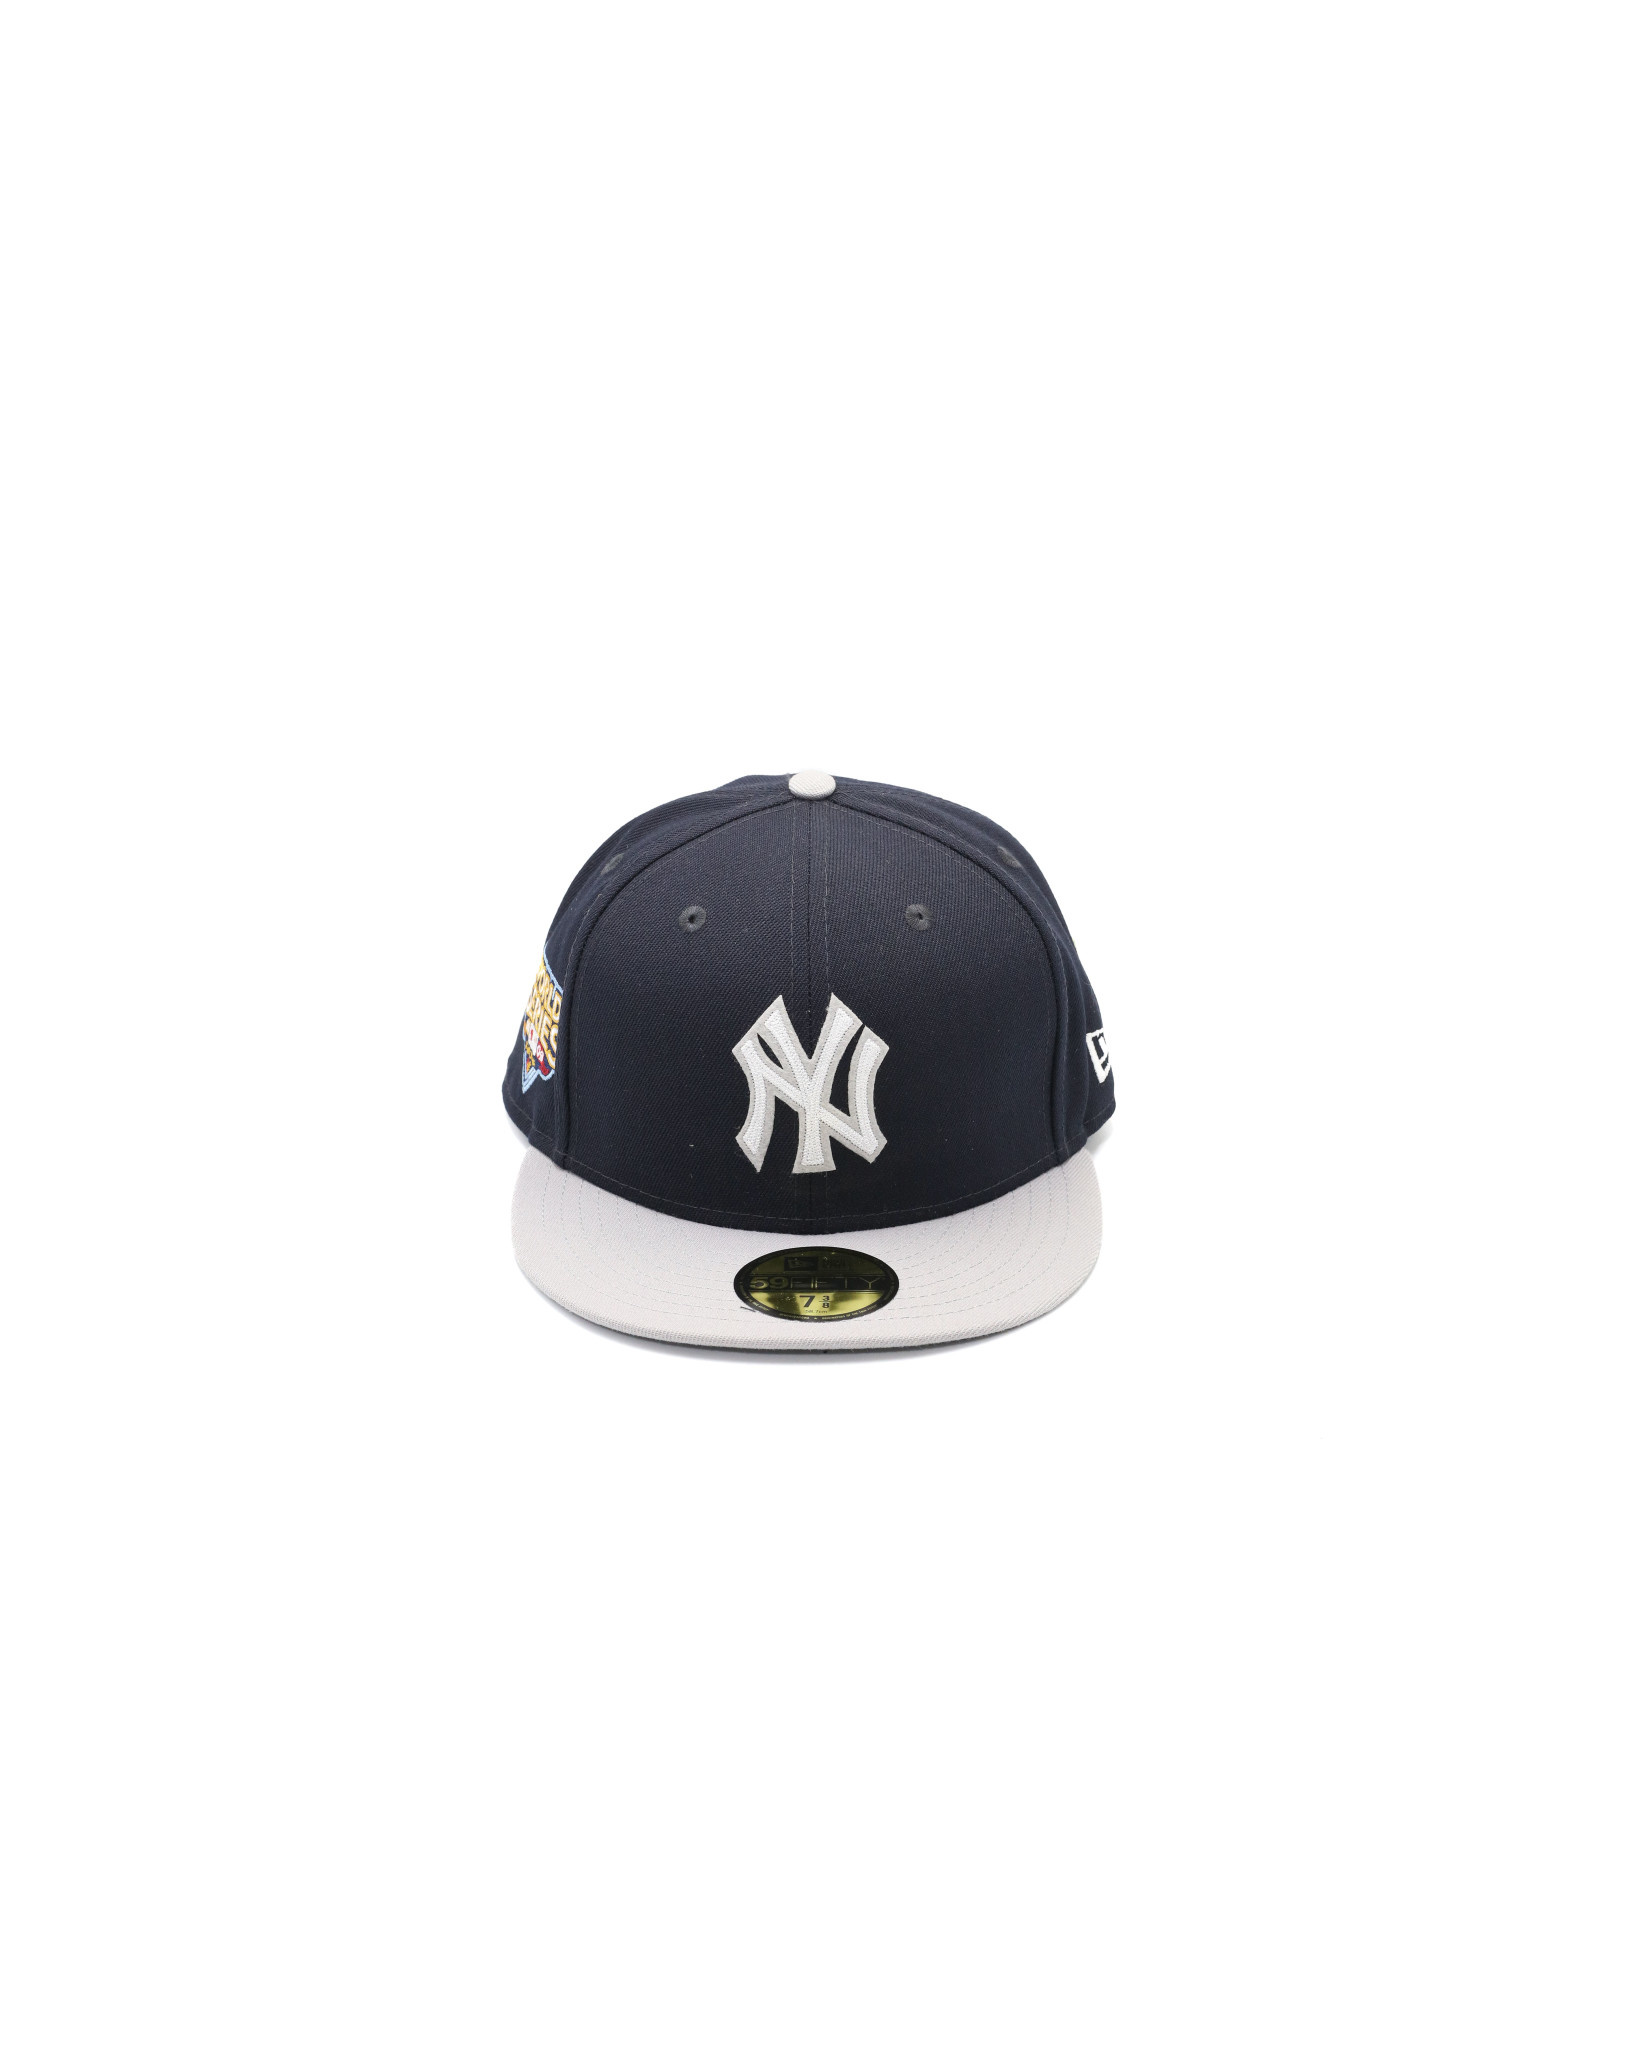 New York Yankees Baseball Flag Tee Shirt 5T / Navy Blue